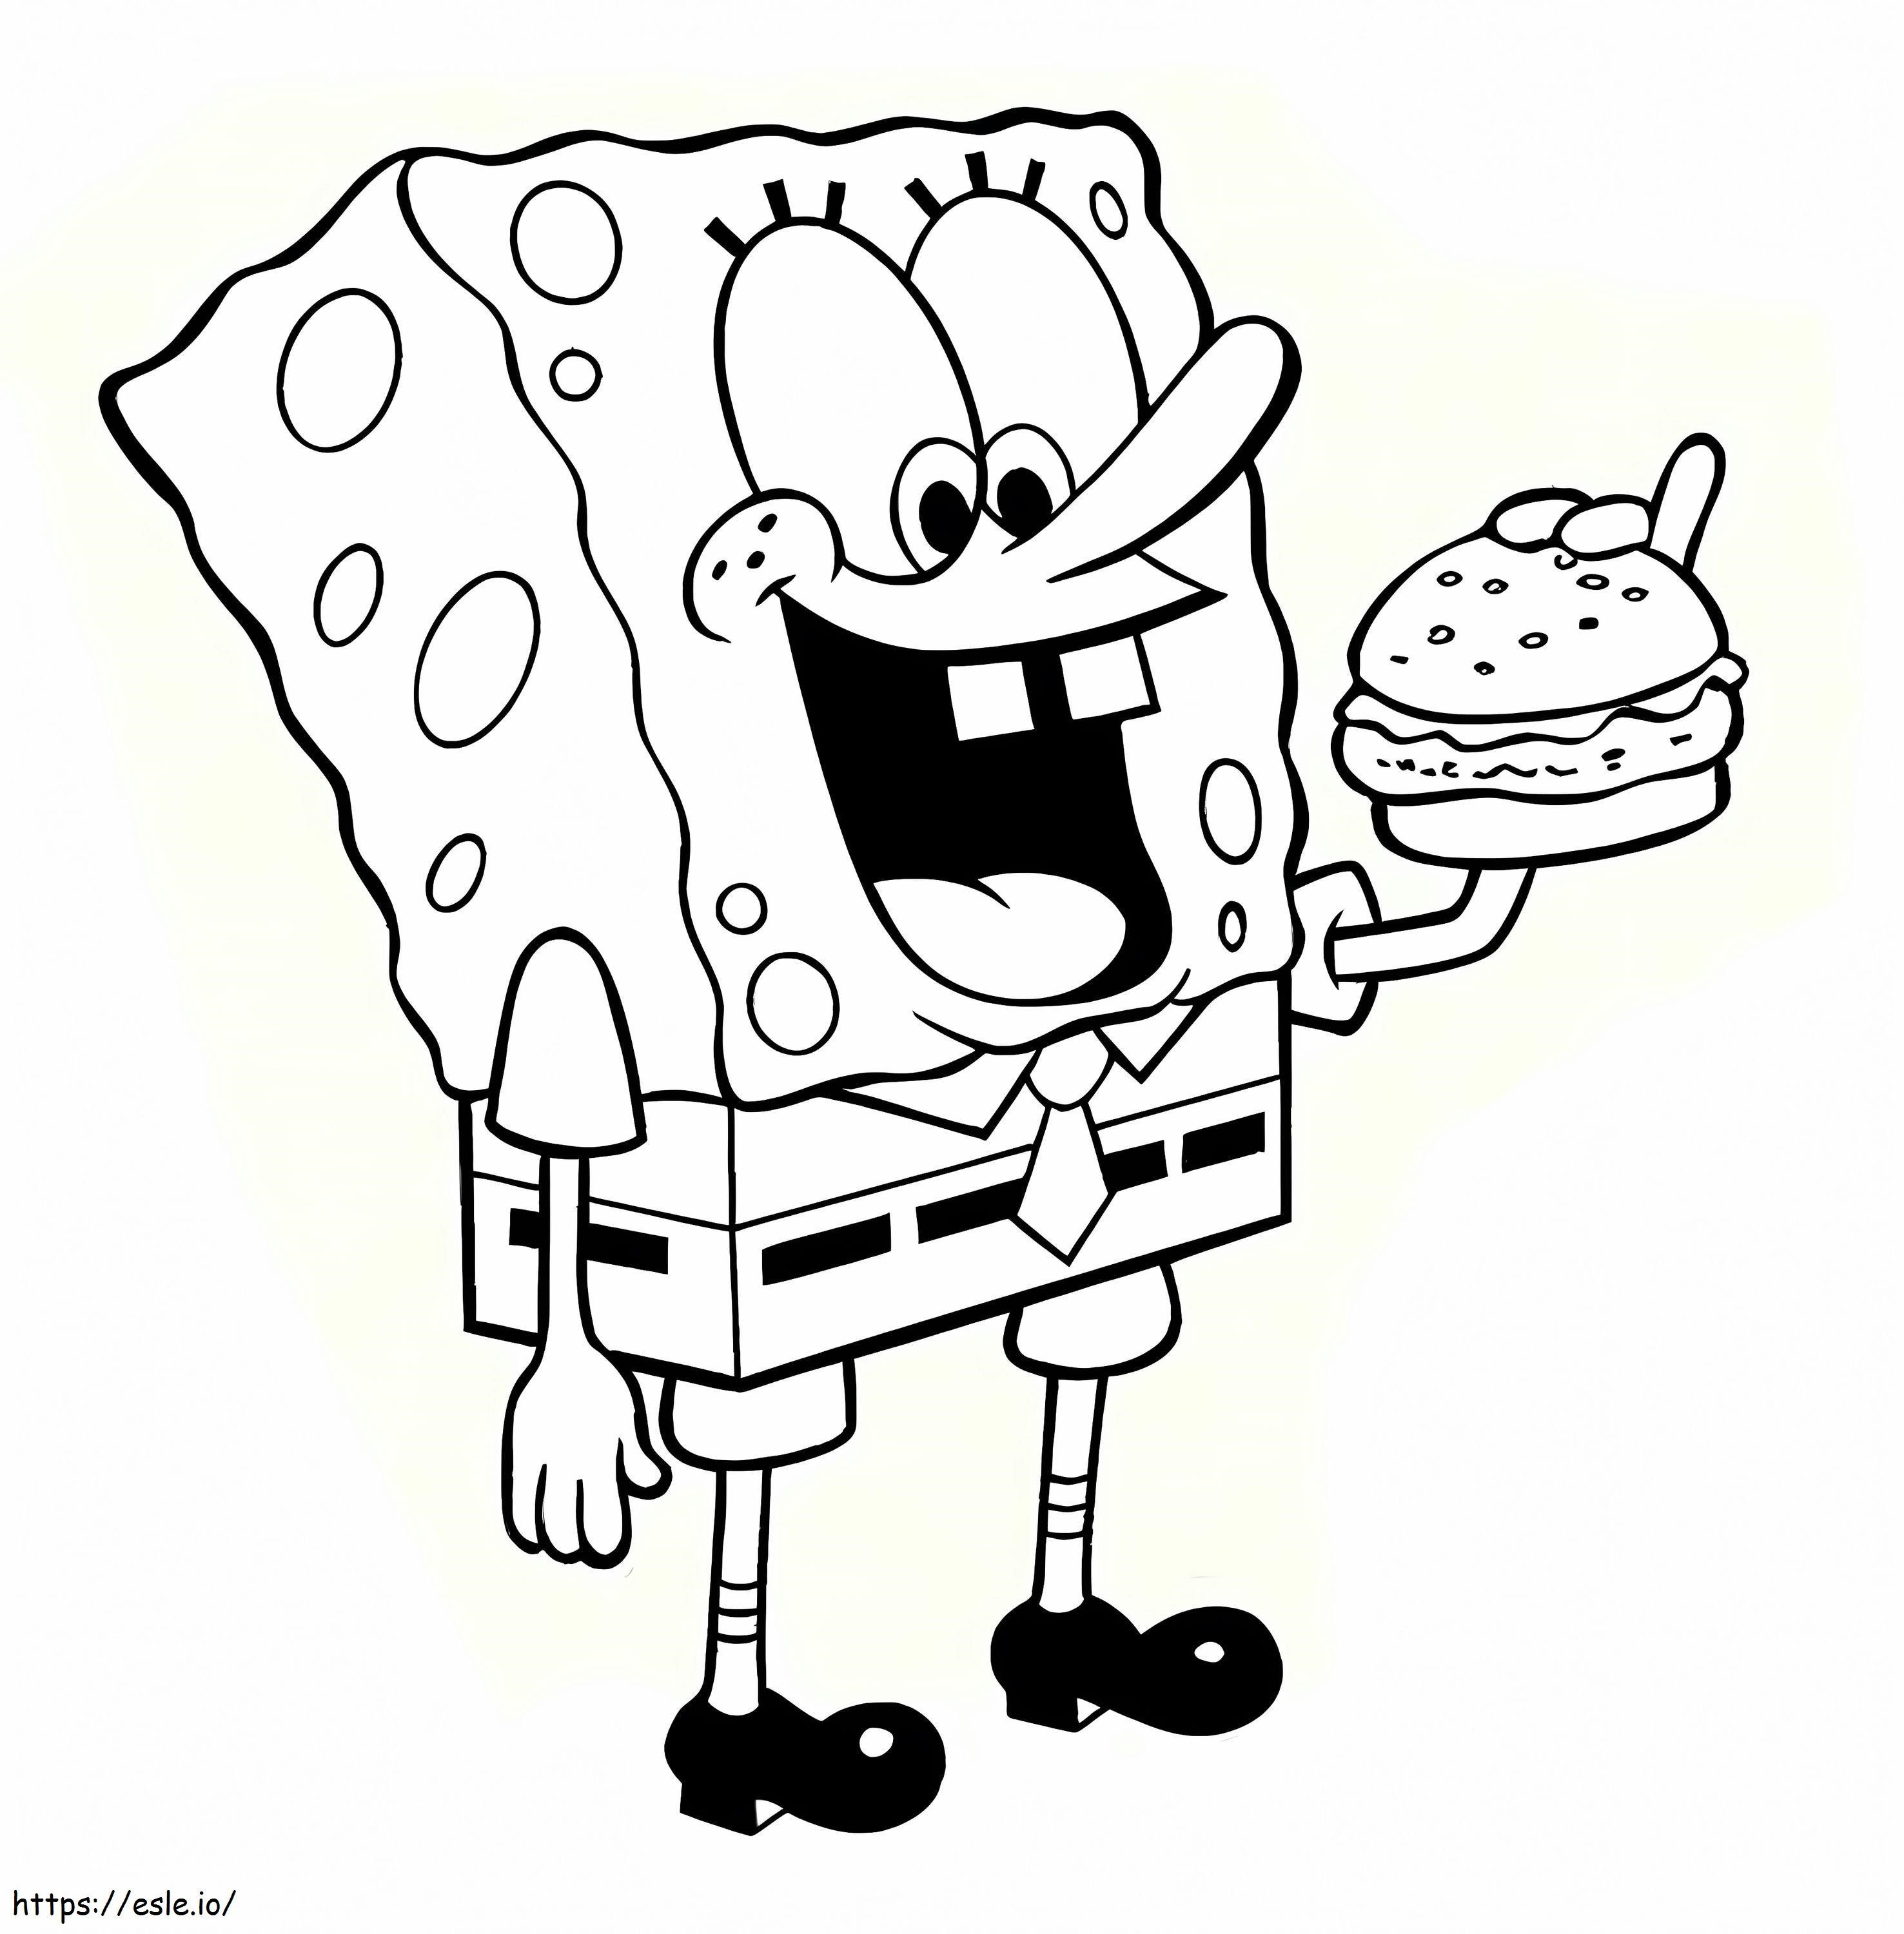 Coloriage Bob l'éponge mangeant un hamburger à imprimer dessin